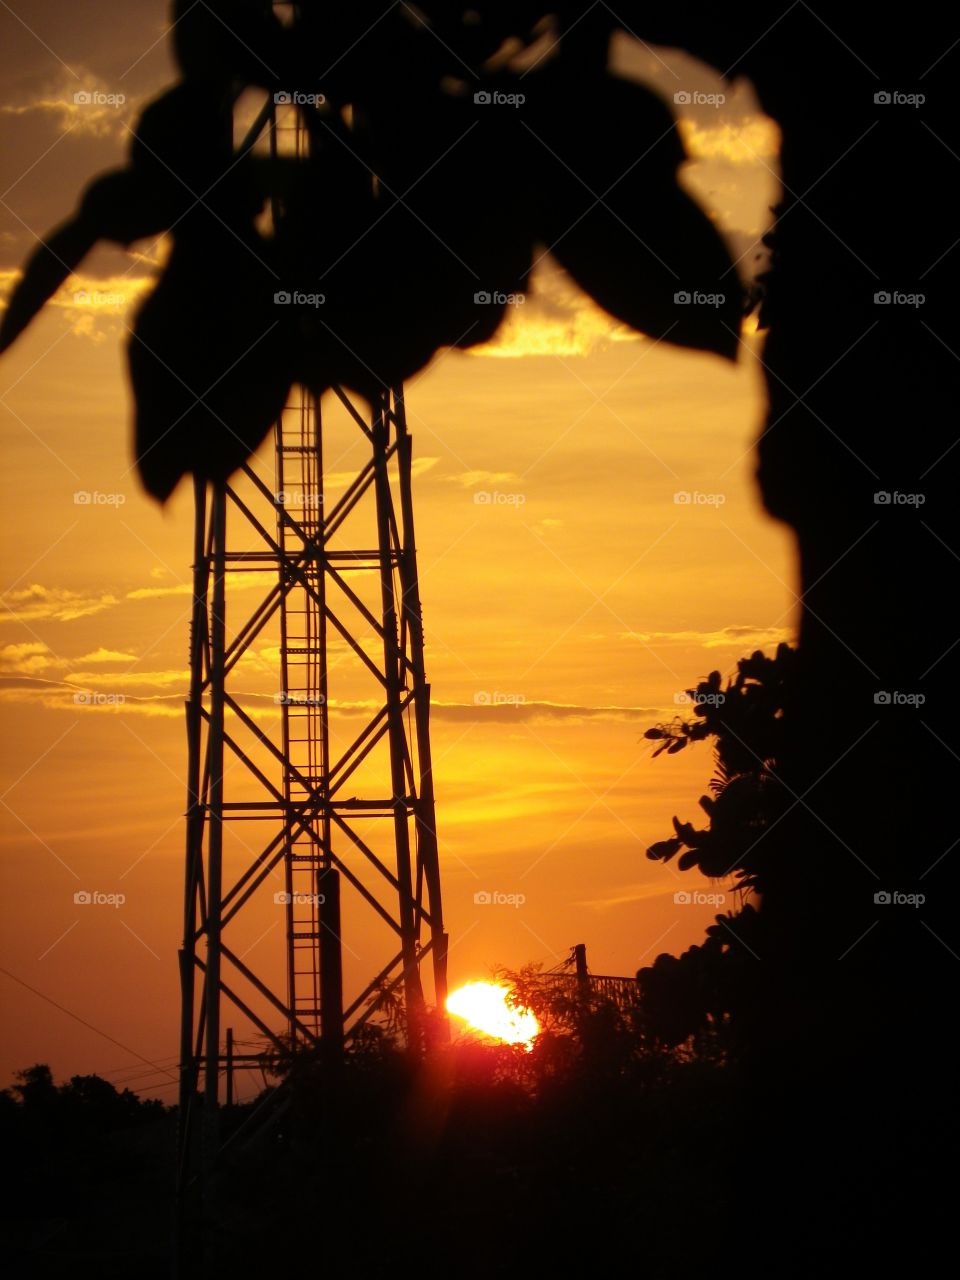 Sunset in Veracruz with tower